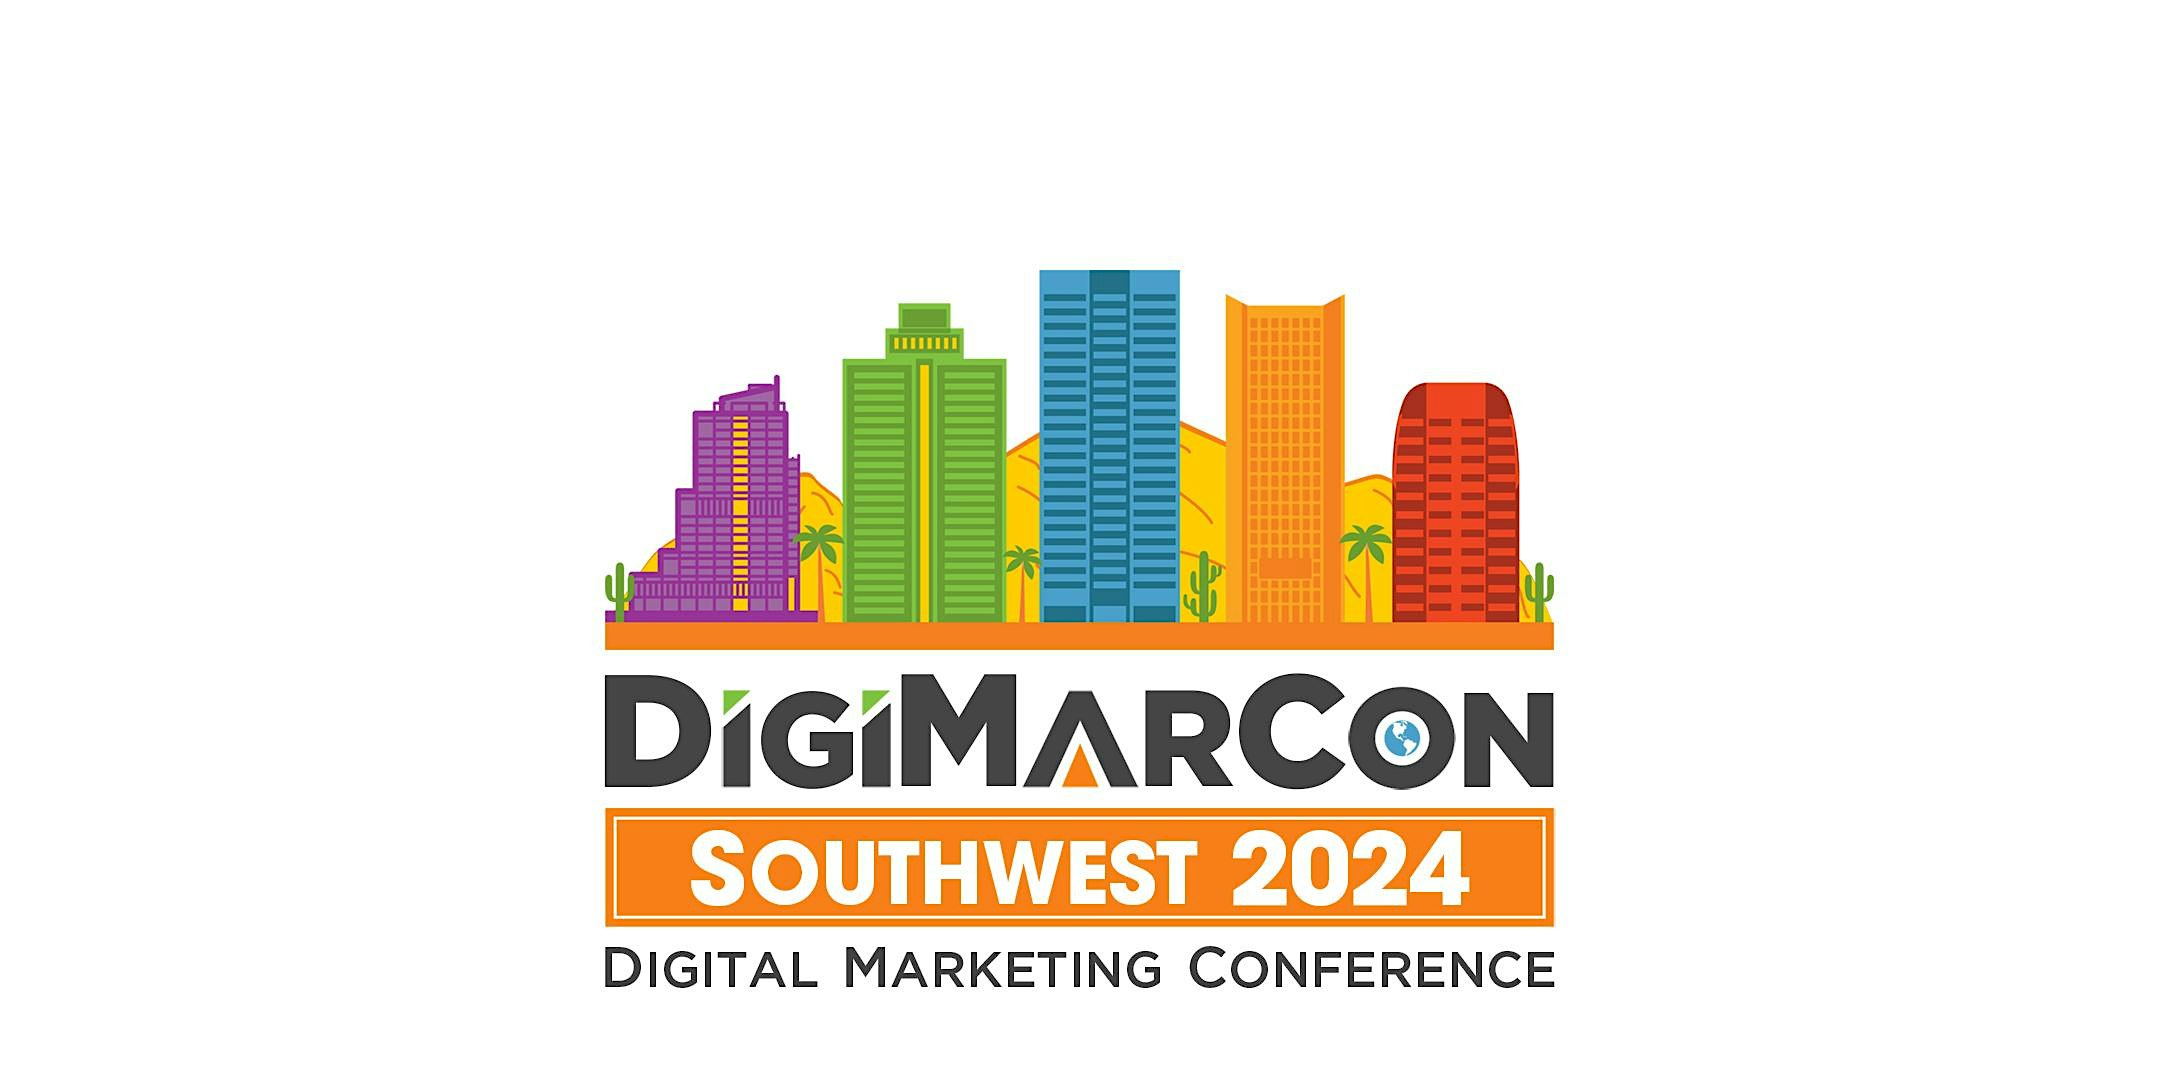 DigiMarCon Southwest 2024 - Digital Marketing Conference & Exhibition